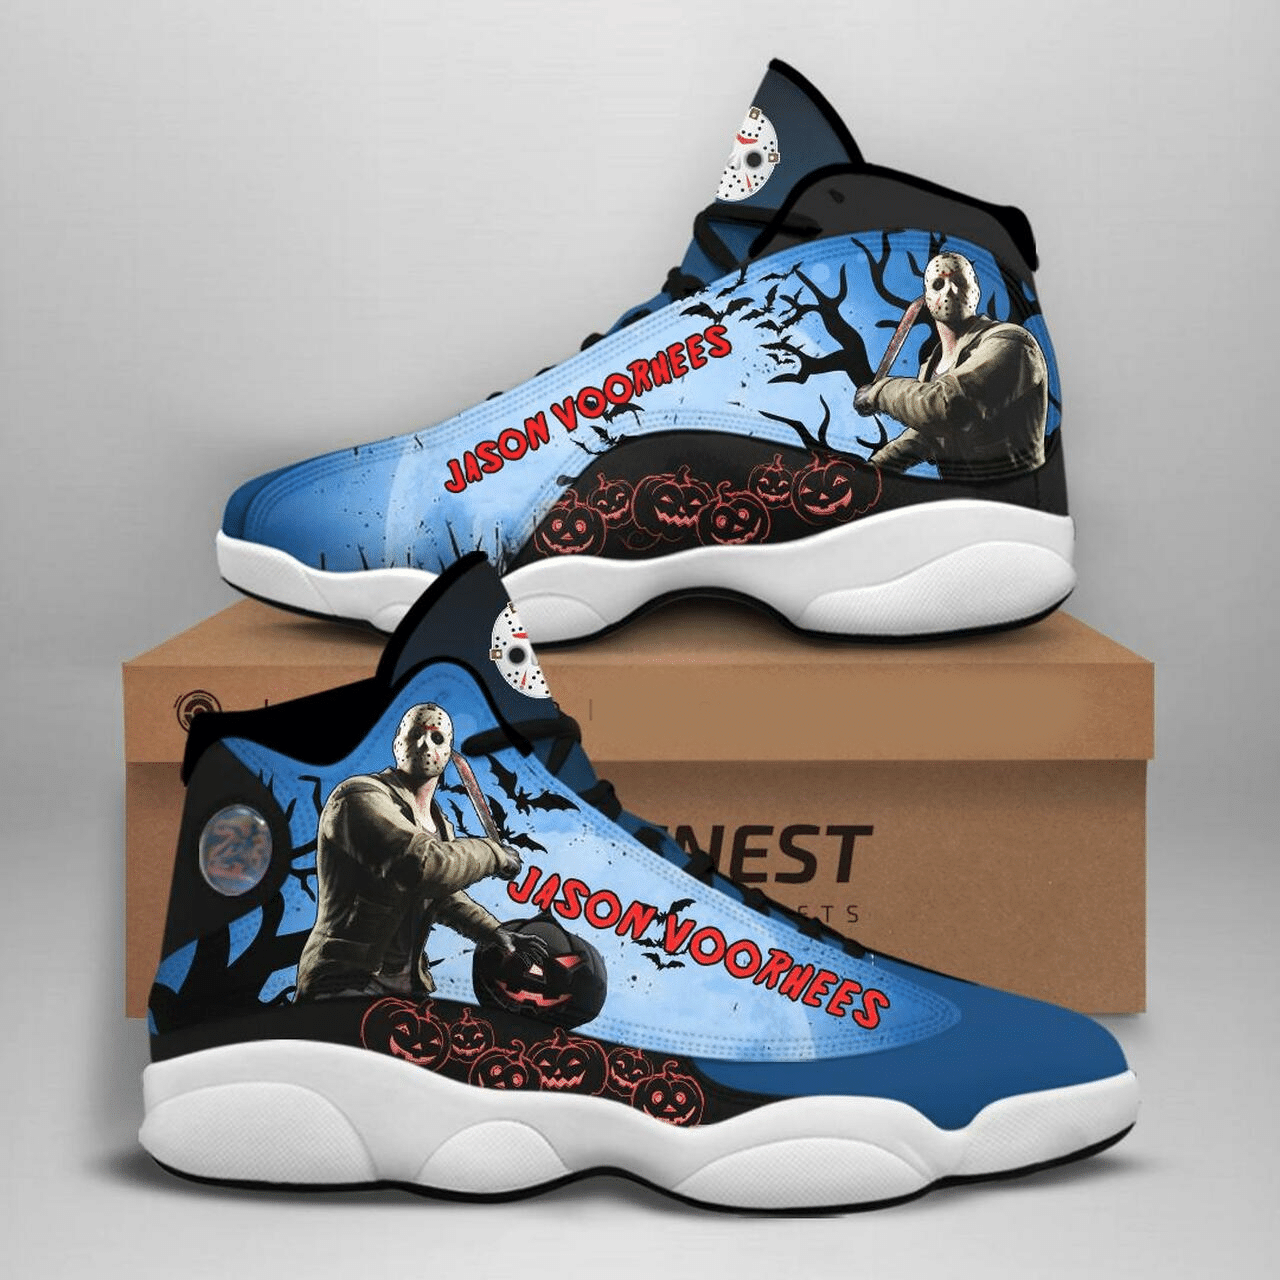 Jason Voorhees Best Gift For Halloween Air Jordan 13 Shoes - Men's Air Jordan 13 - Blue